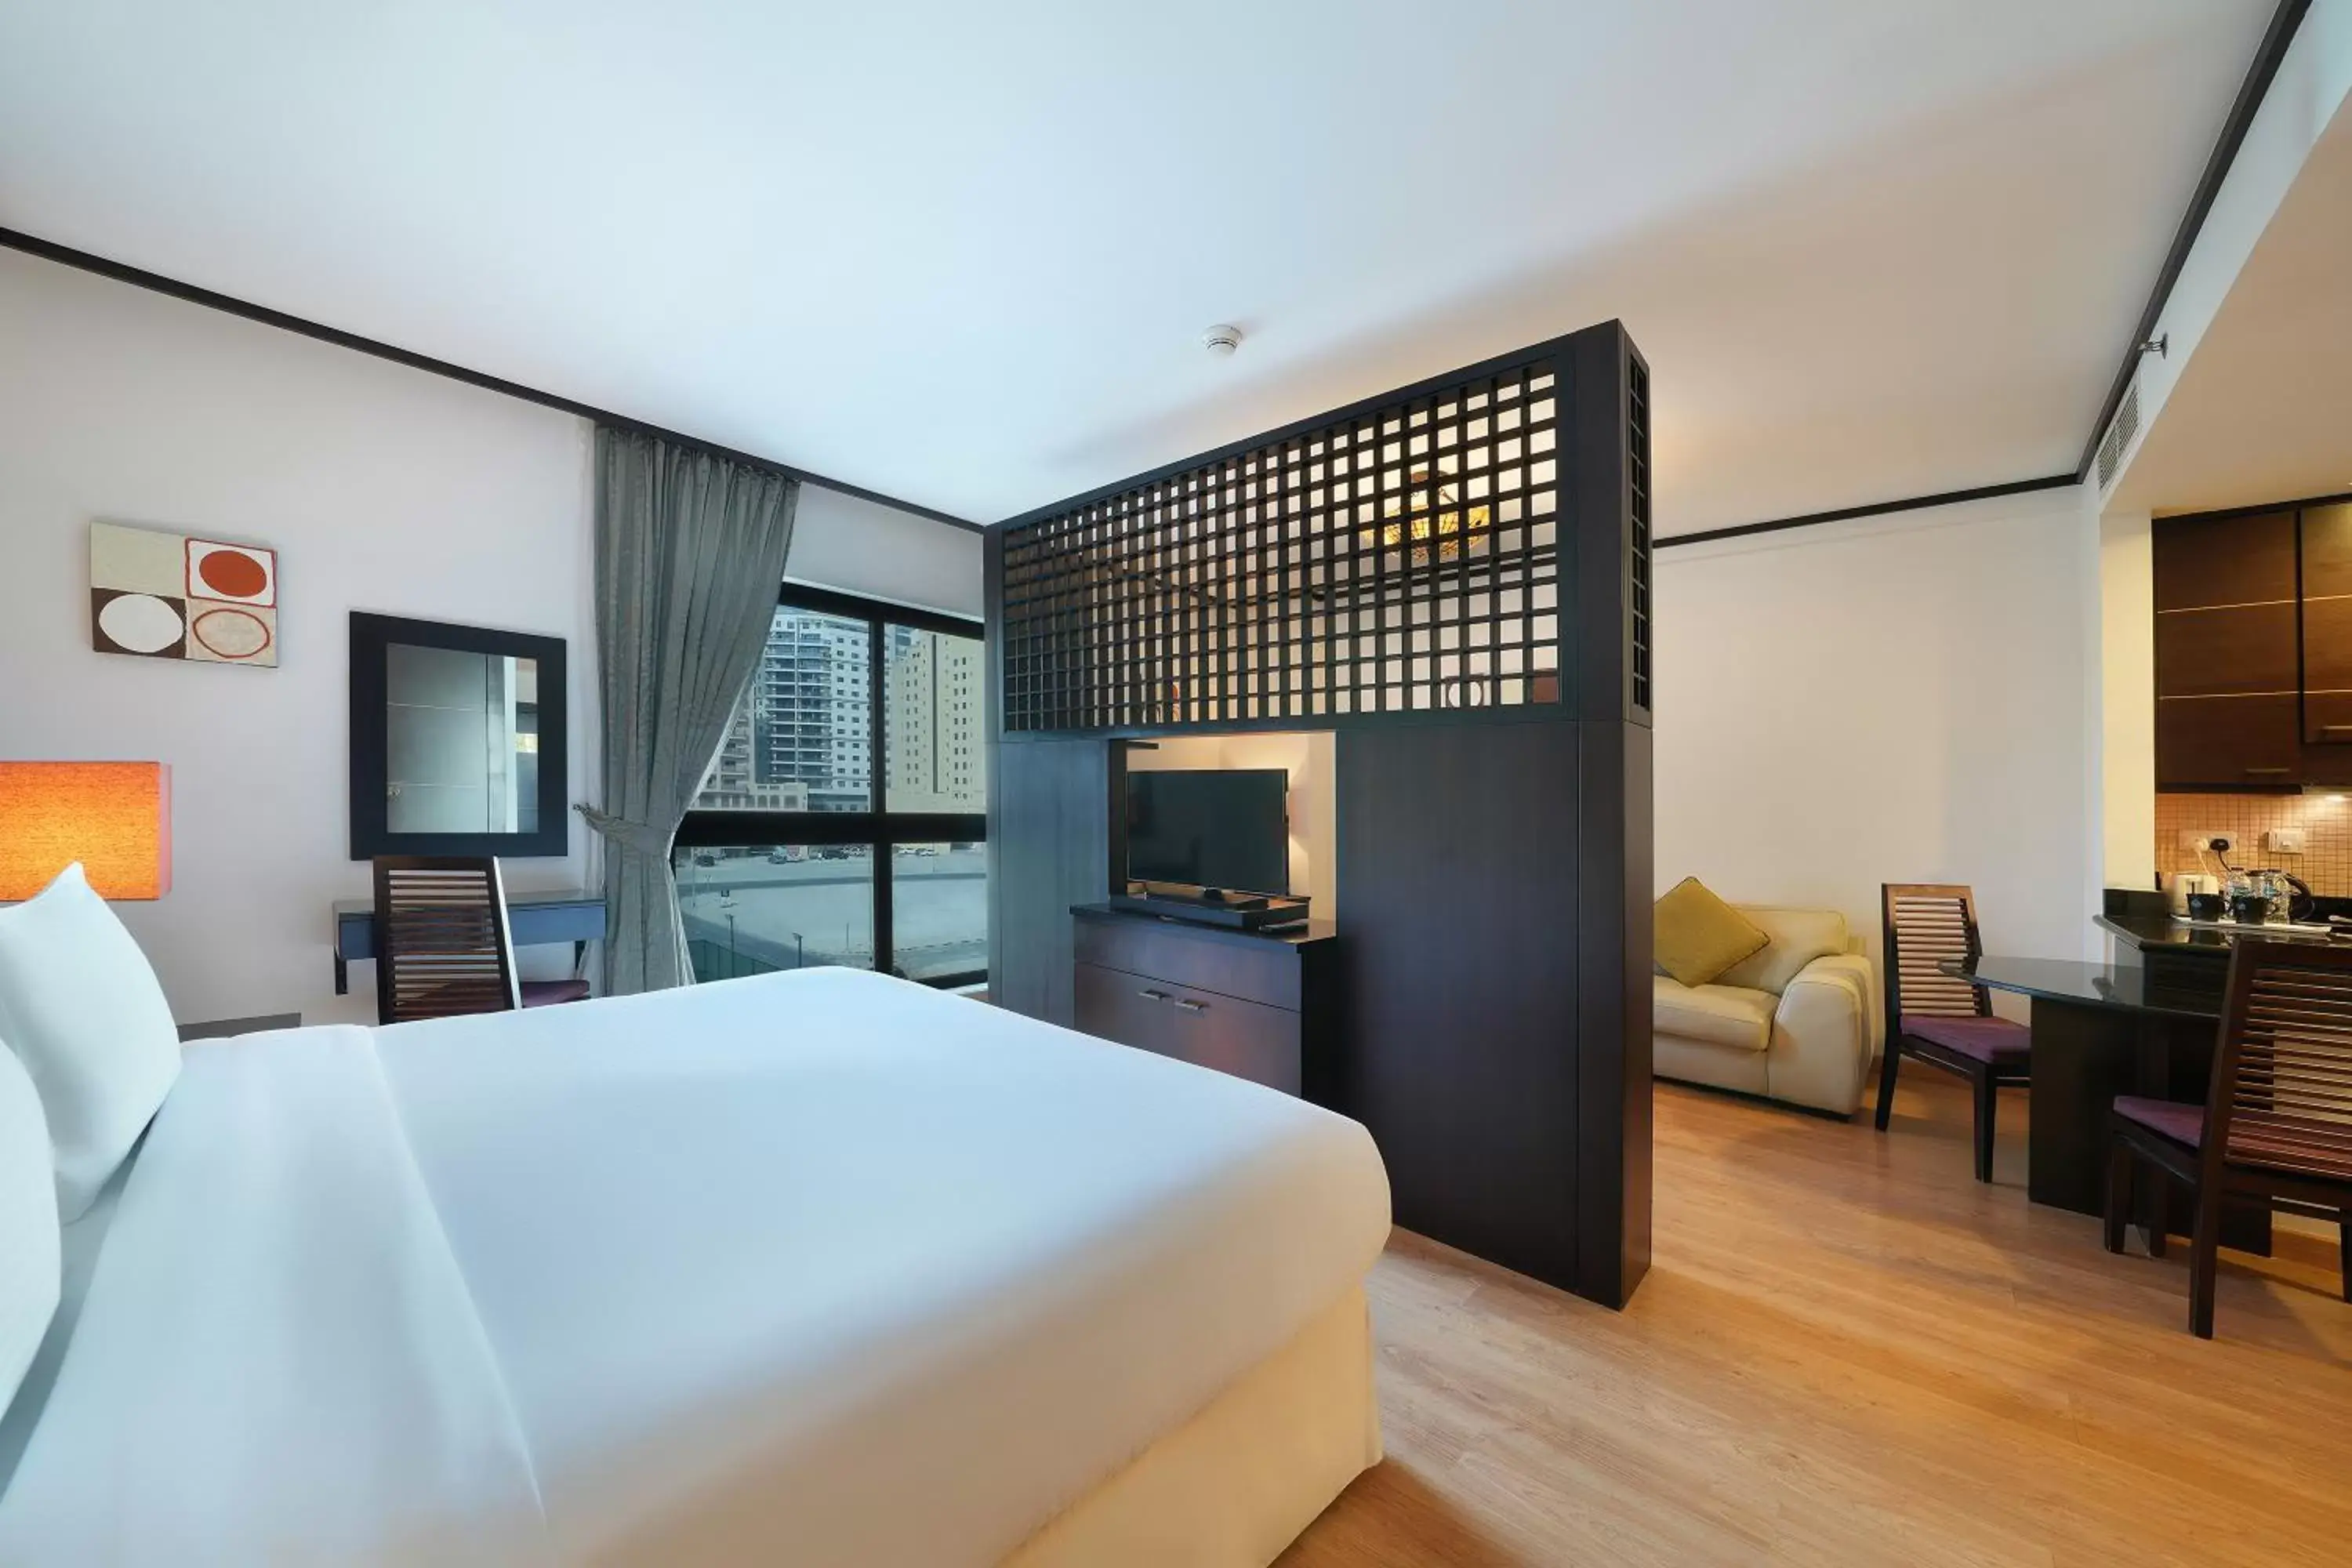 Bed in Park Apartments Dubai, an Edge By Rotana Hotel